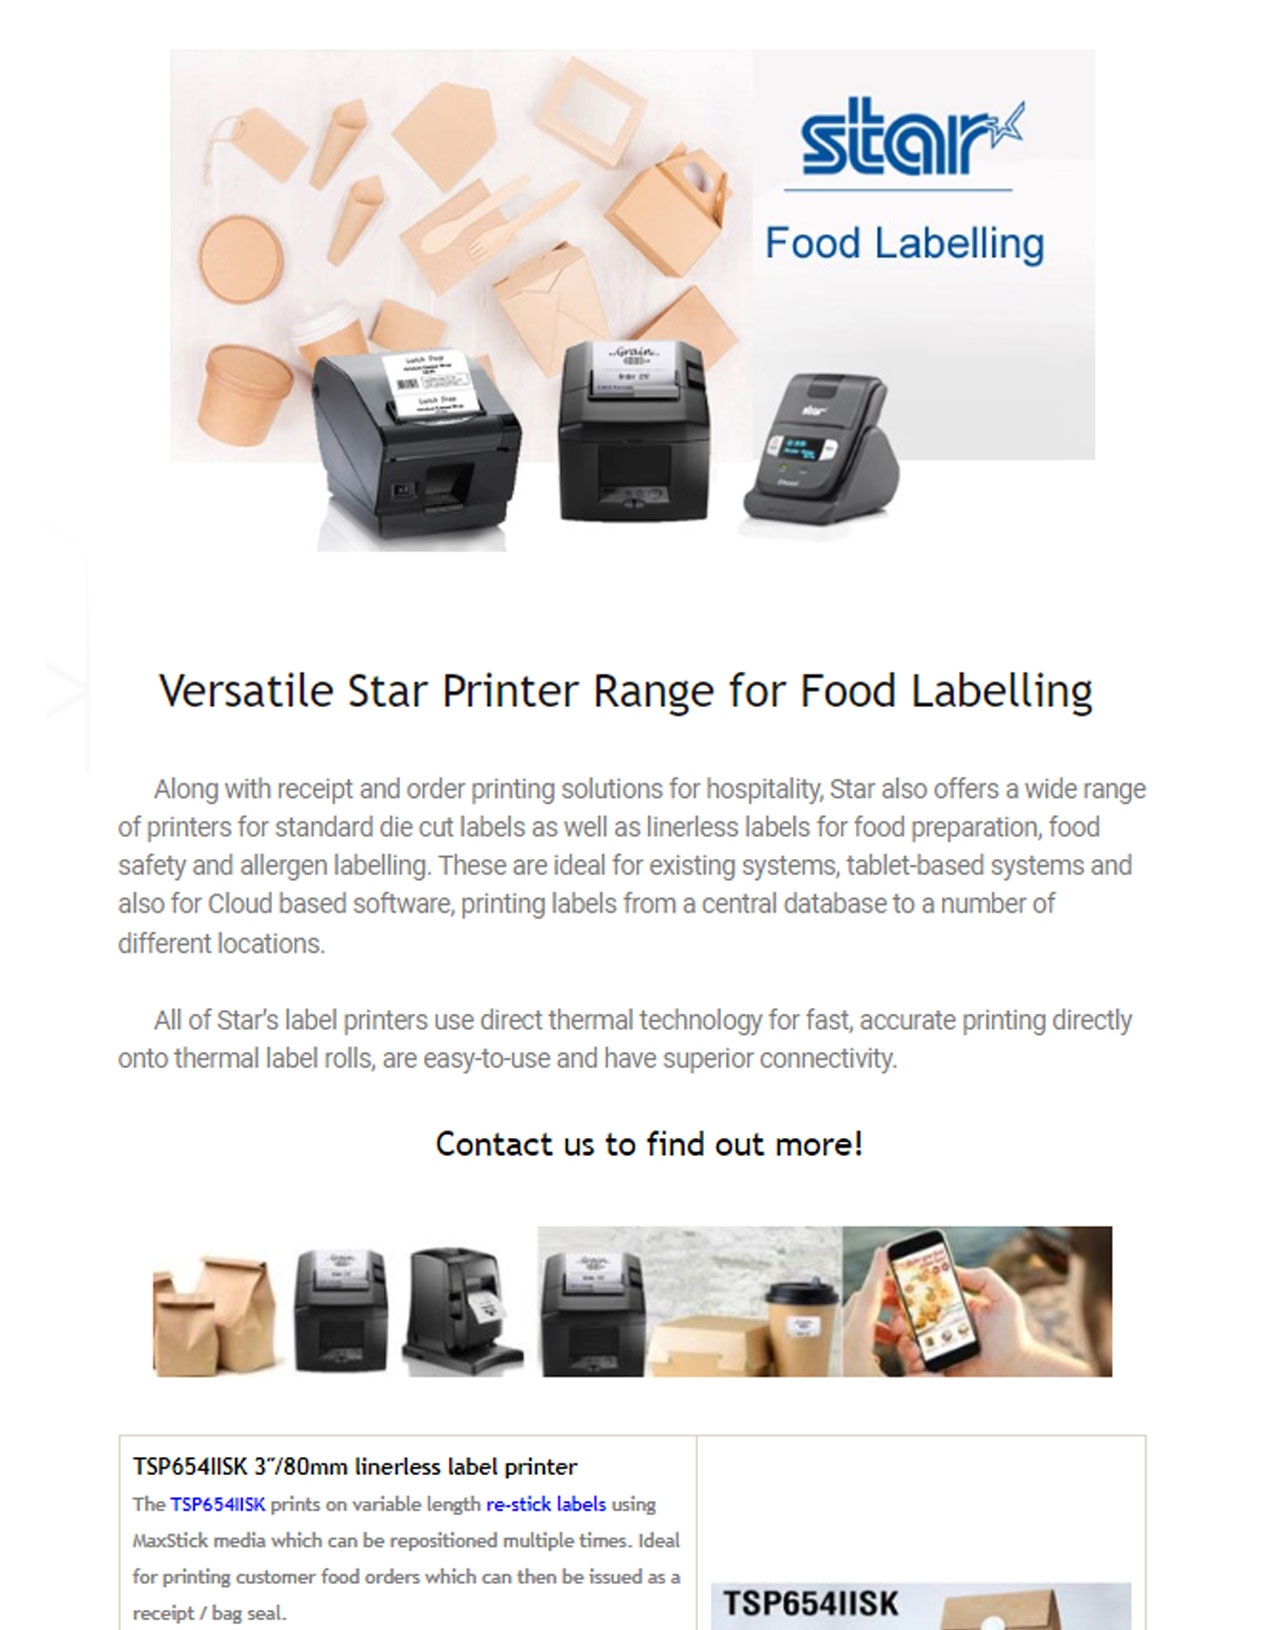 Versatile Star Printer Range for Food Labeling